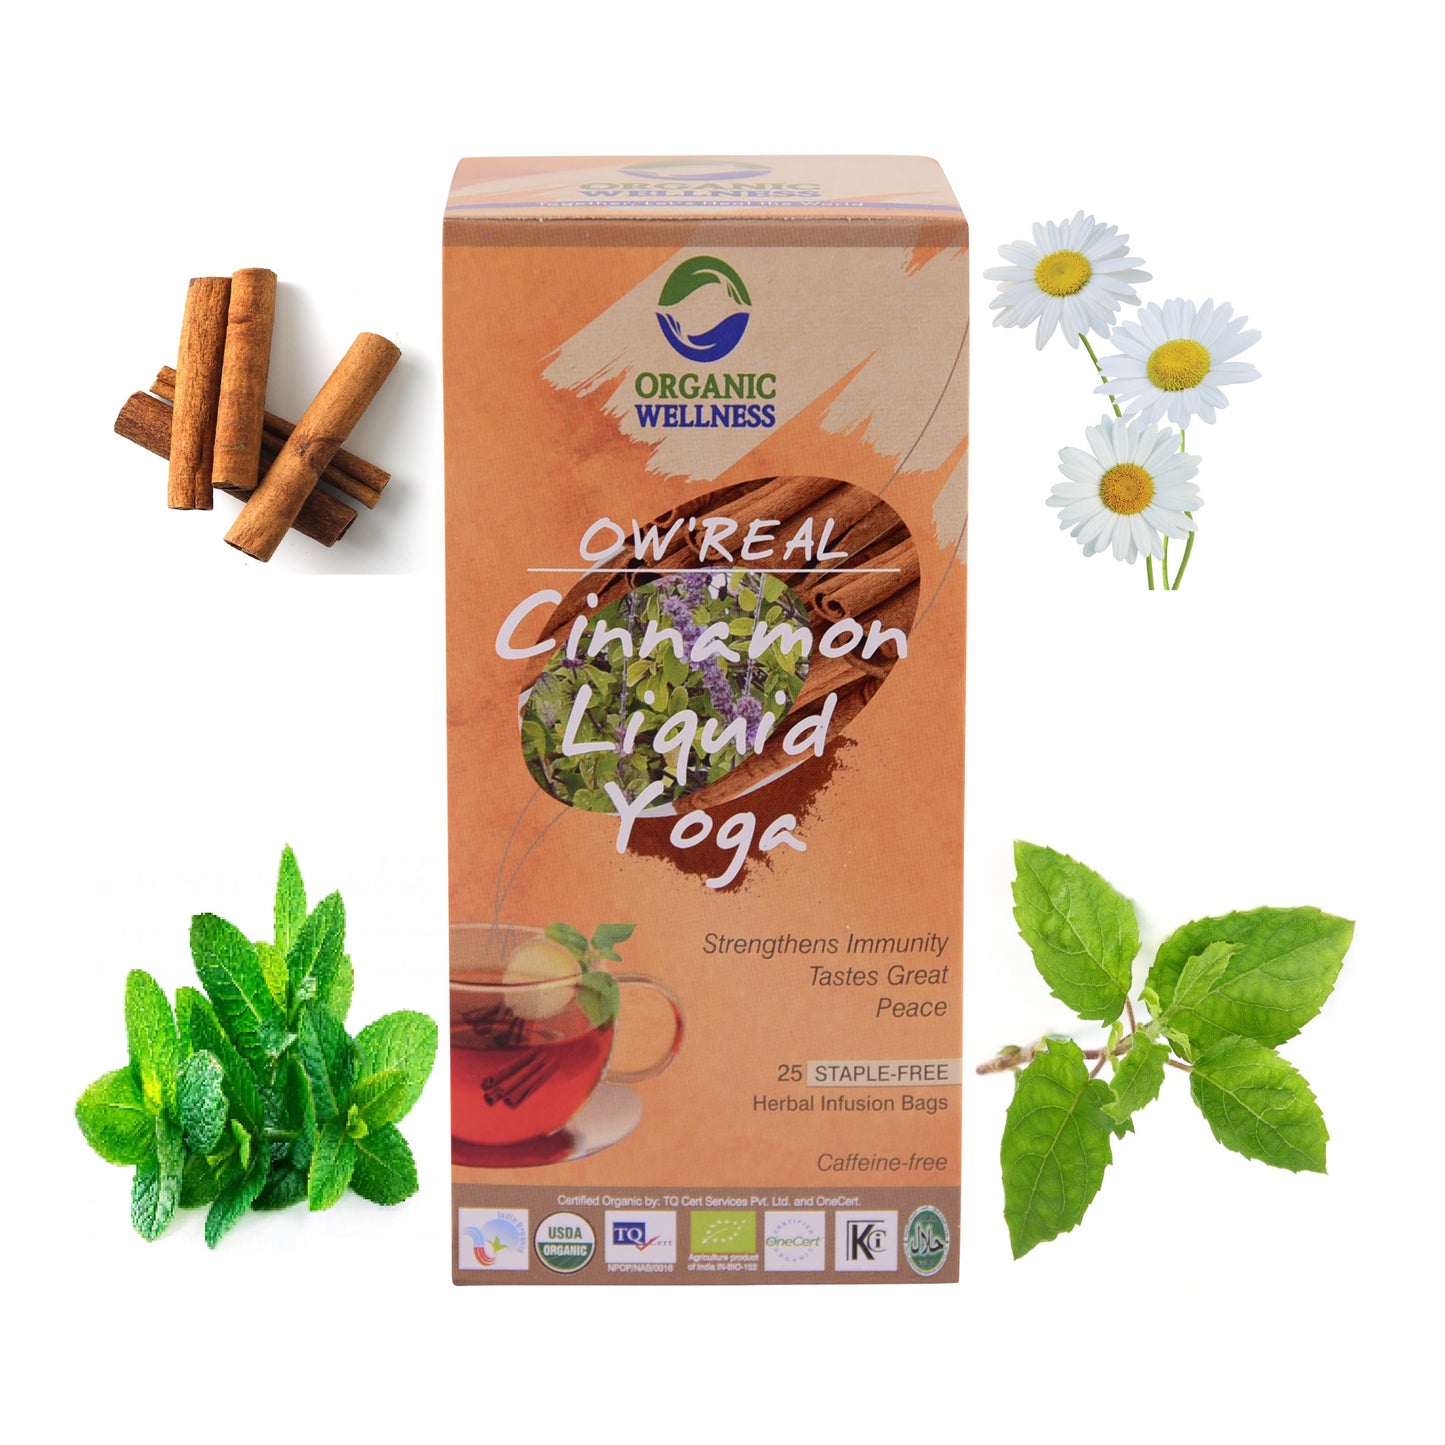 Real Cinnamon Liquid Yoga Tea Bags